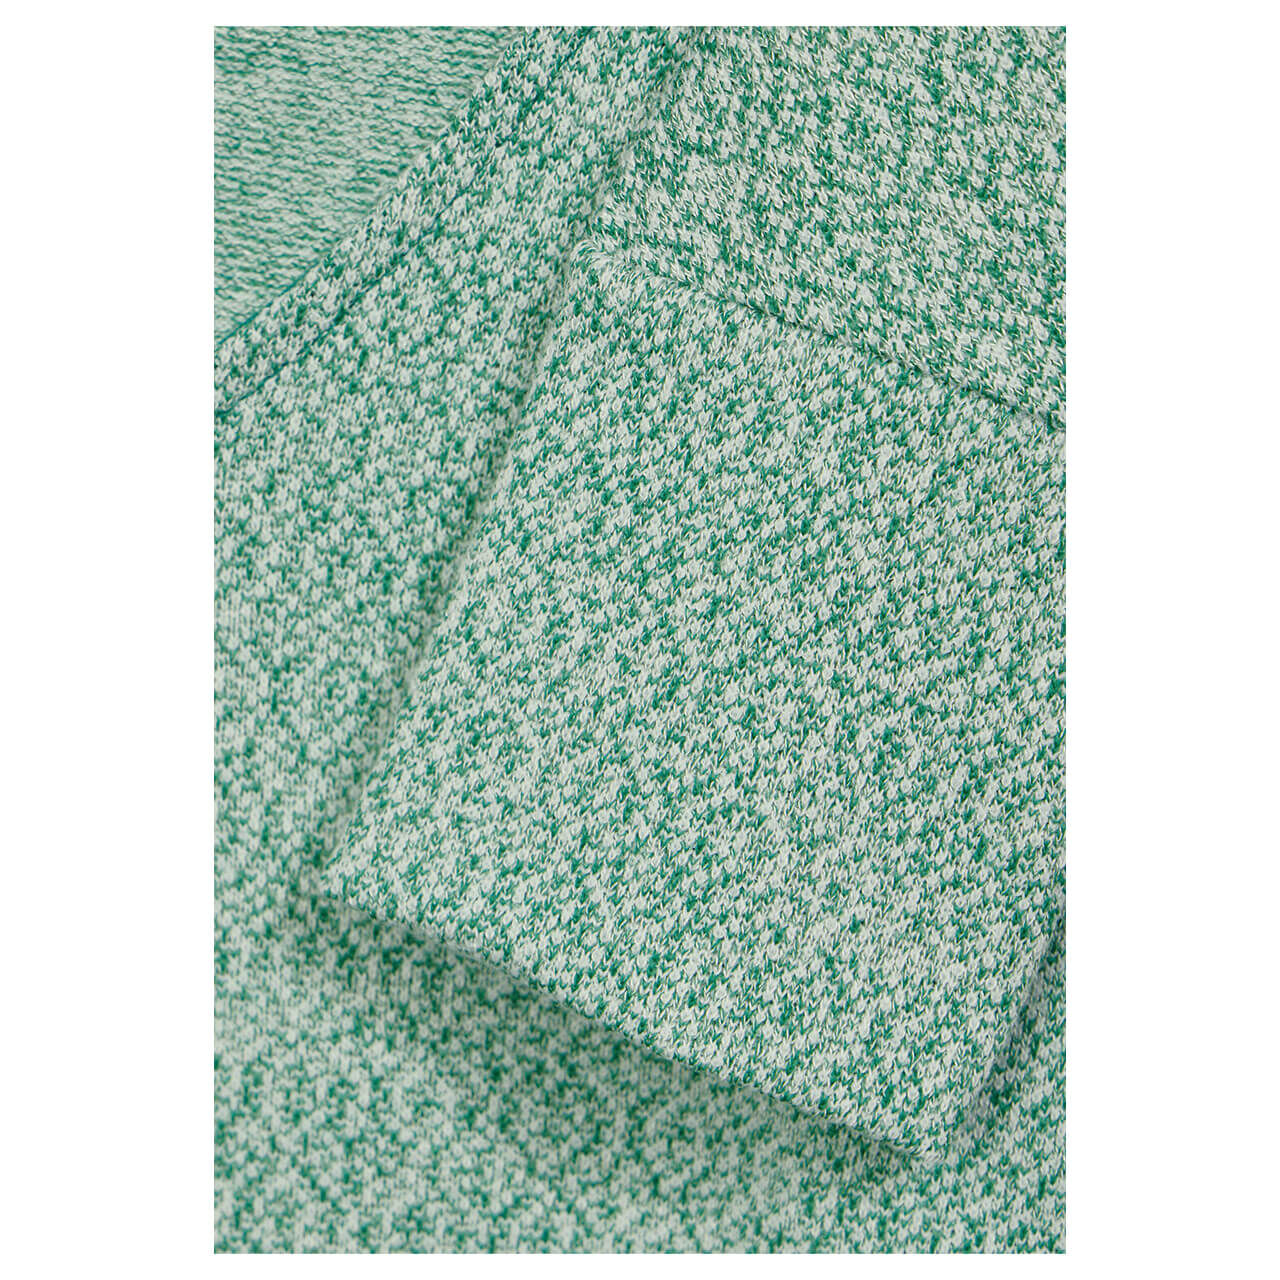 Street One Damen Langarm Shirt 2-Color Structure fresh green melange